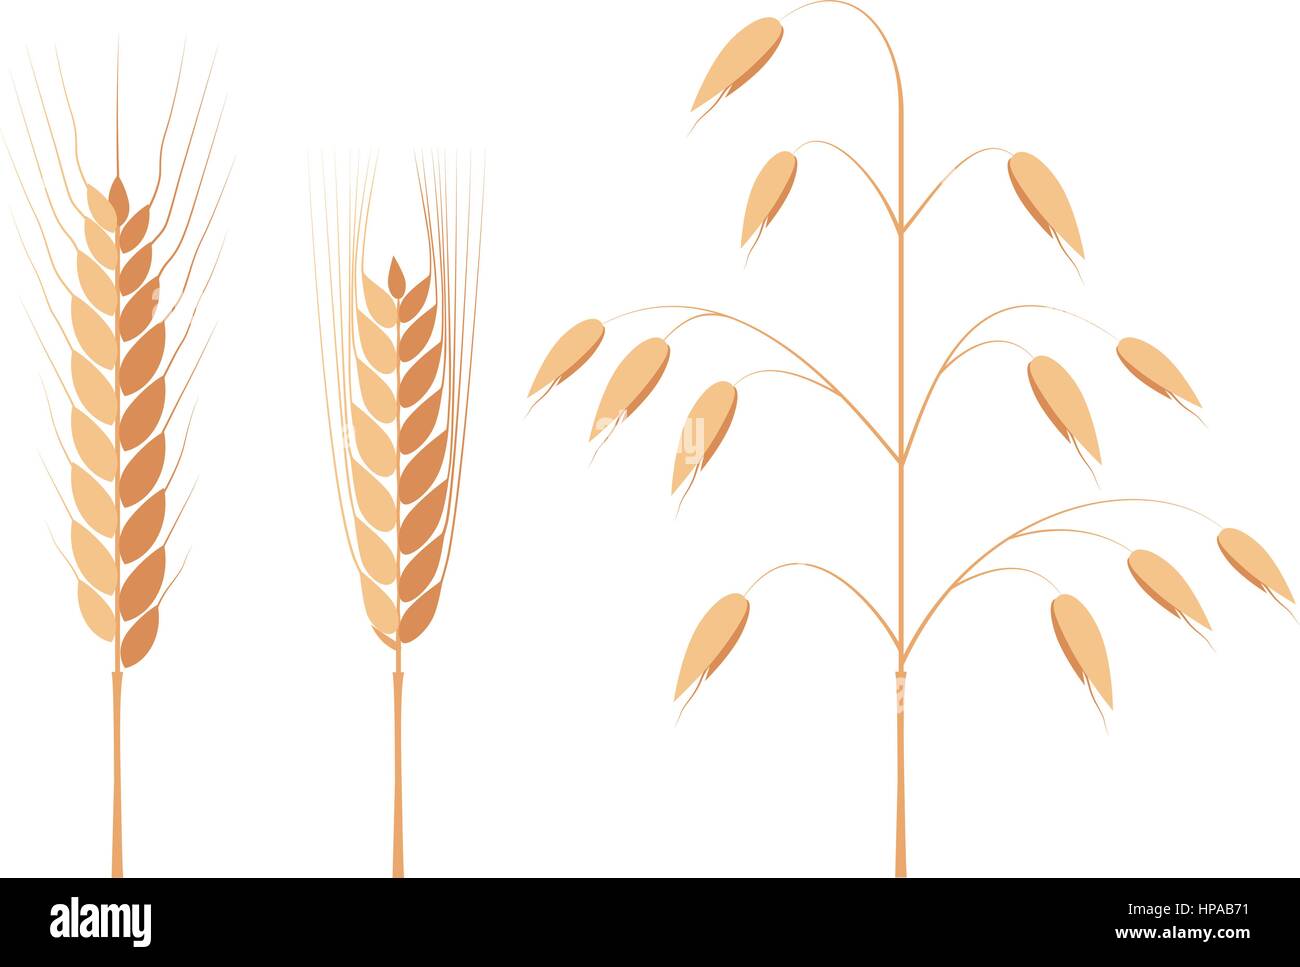 Wheat, barley and oat ears vector illustration Stock Vector